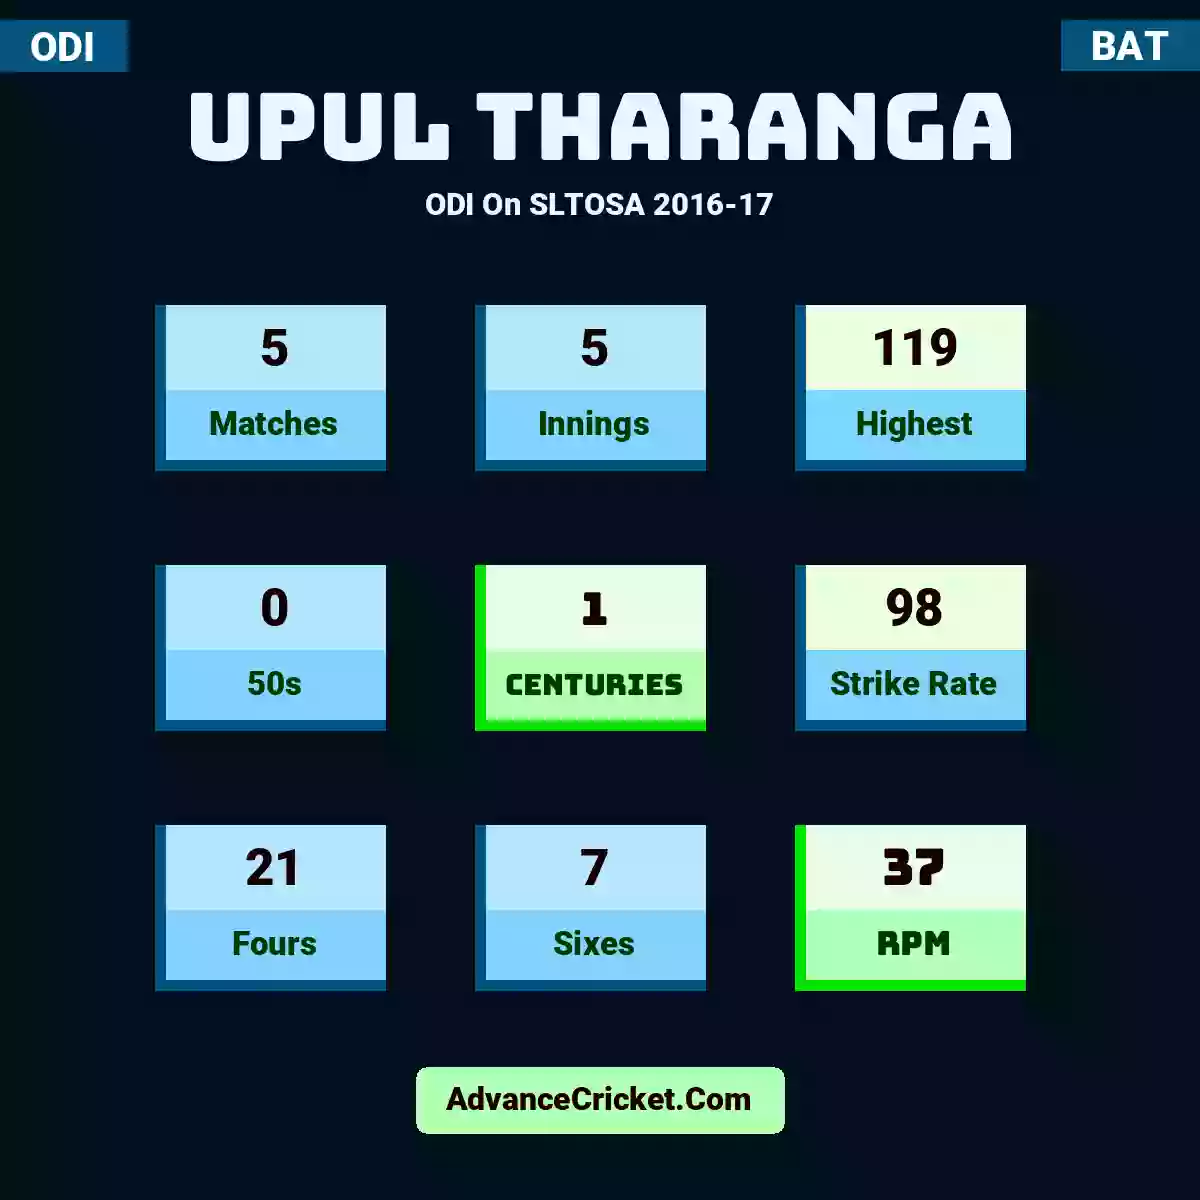 Upul Tharanga ODI  On SLTOSA 2016-17, Upul Tharanga played 5 matches, scored 119 runs as highest, 0 half-centuries, and 1 centuries, with a strike rate of 98. U.Tharanga hit 21 fours and 7 sixes, with an RPM of 37.